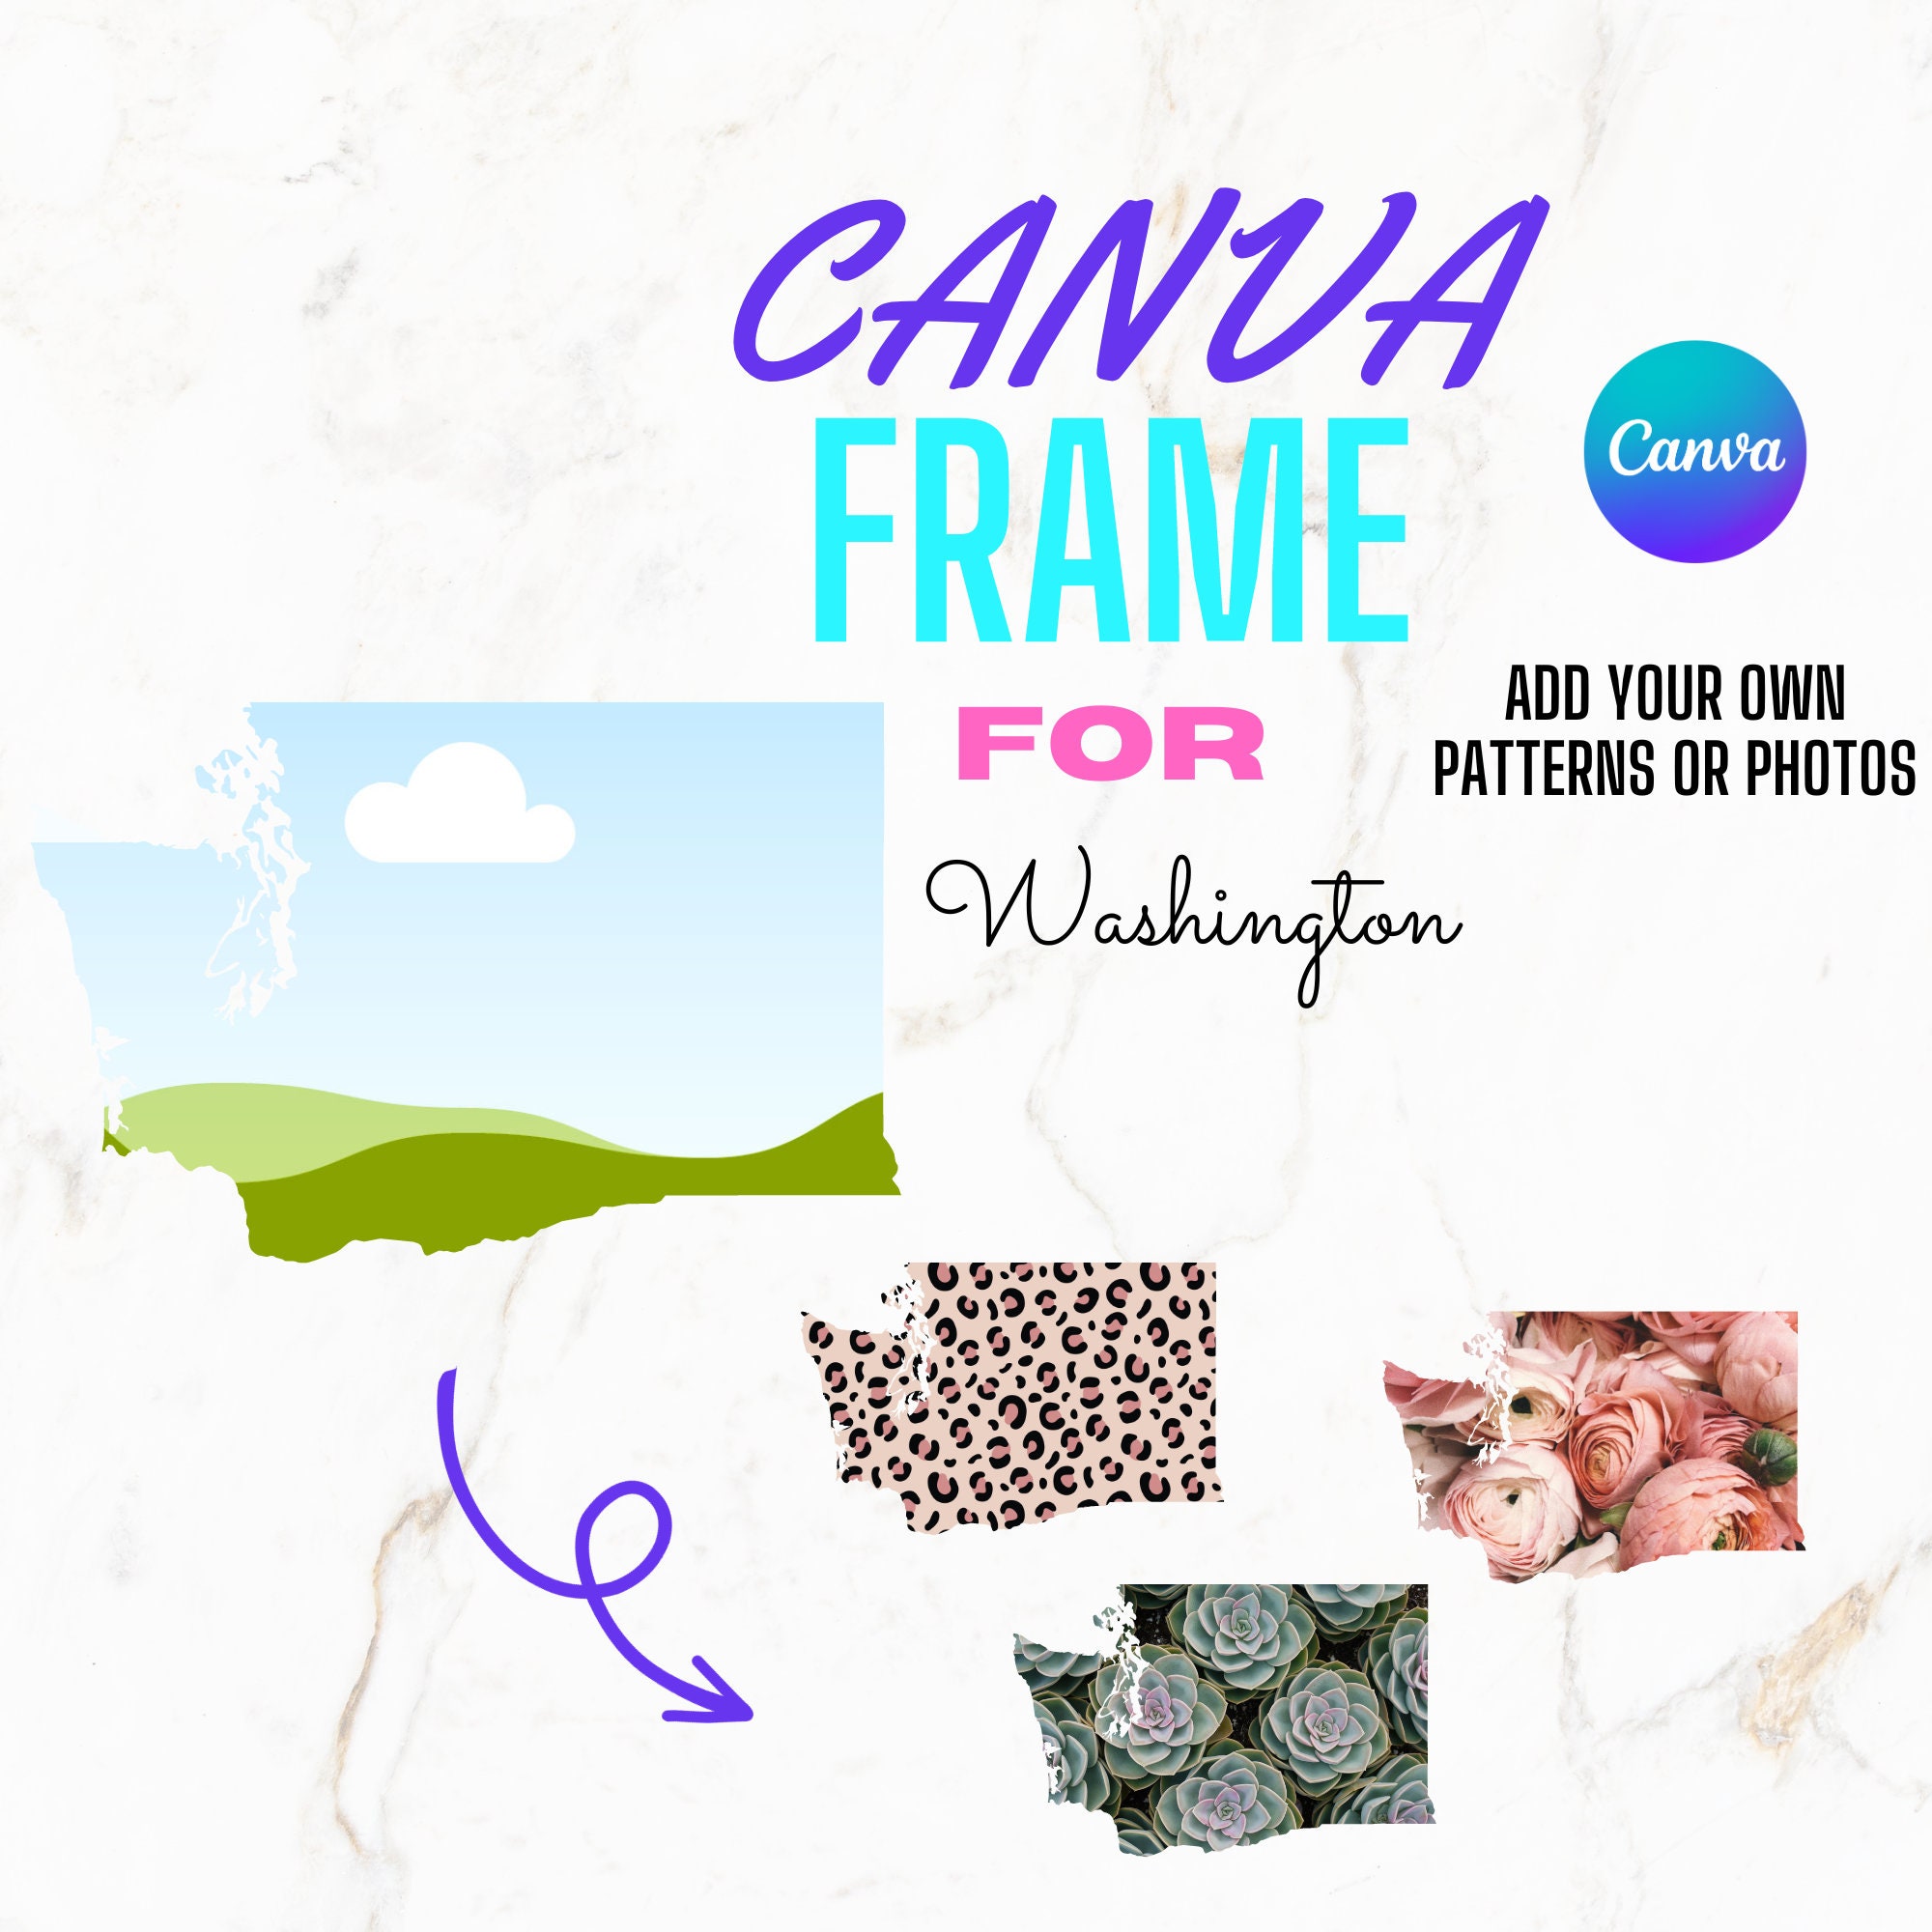 Canva Frame for Washington Digital Template